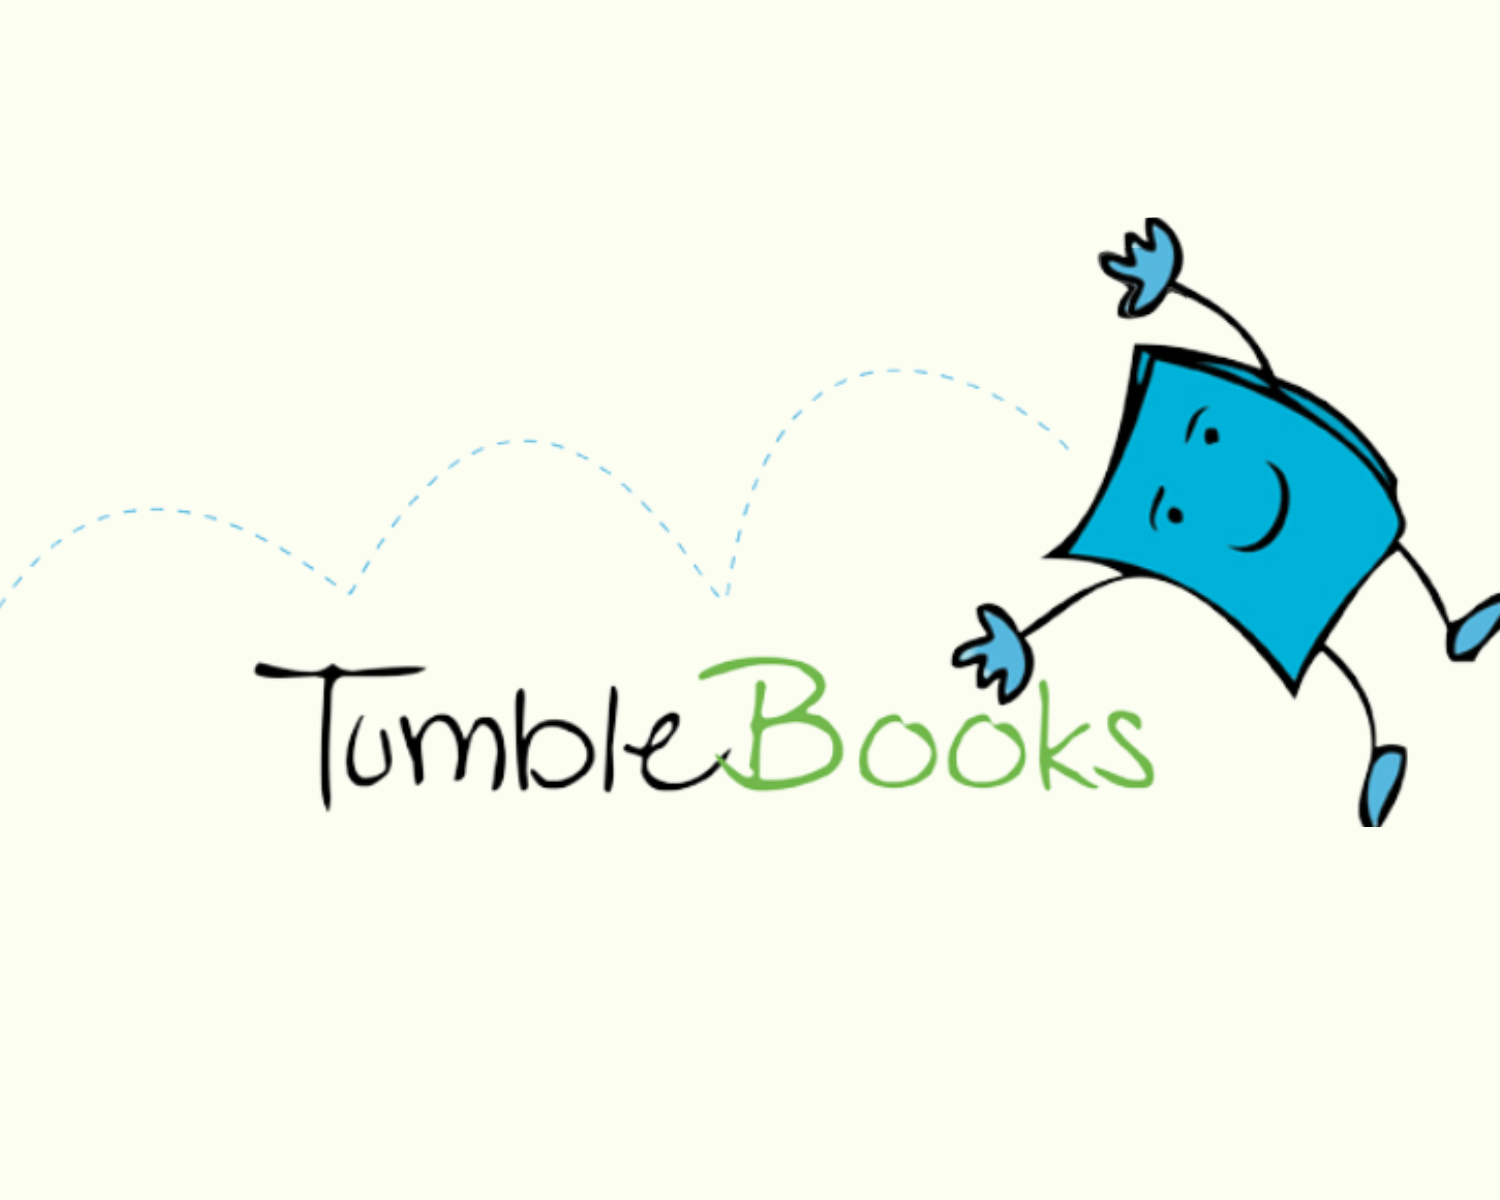 Tumble Books; illustration of a smiling book doing cartwheels